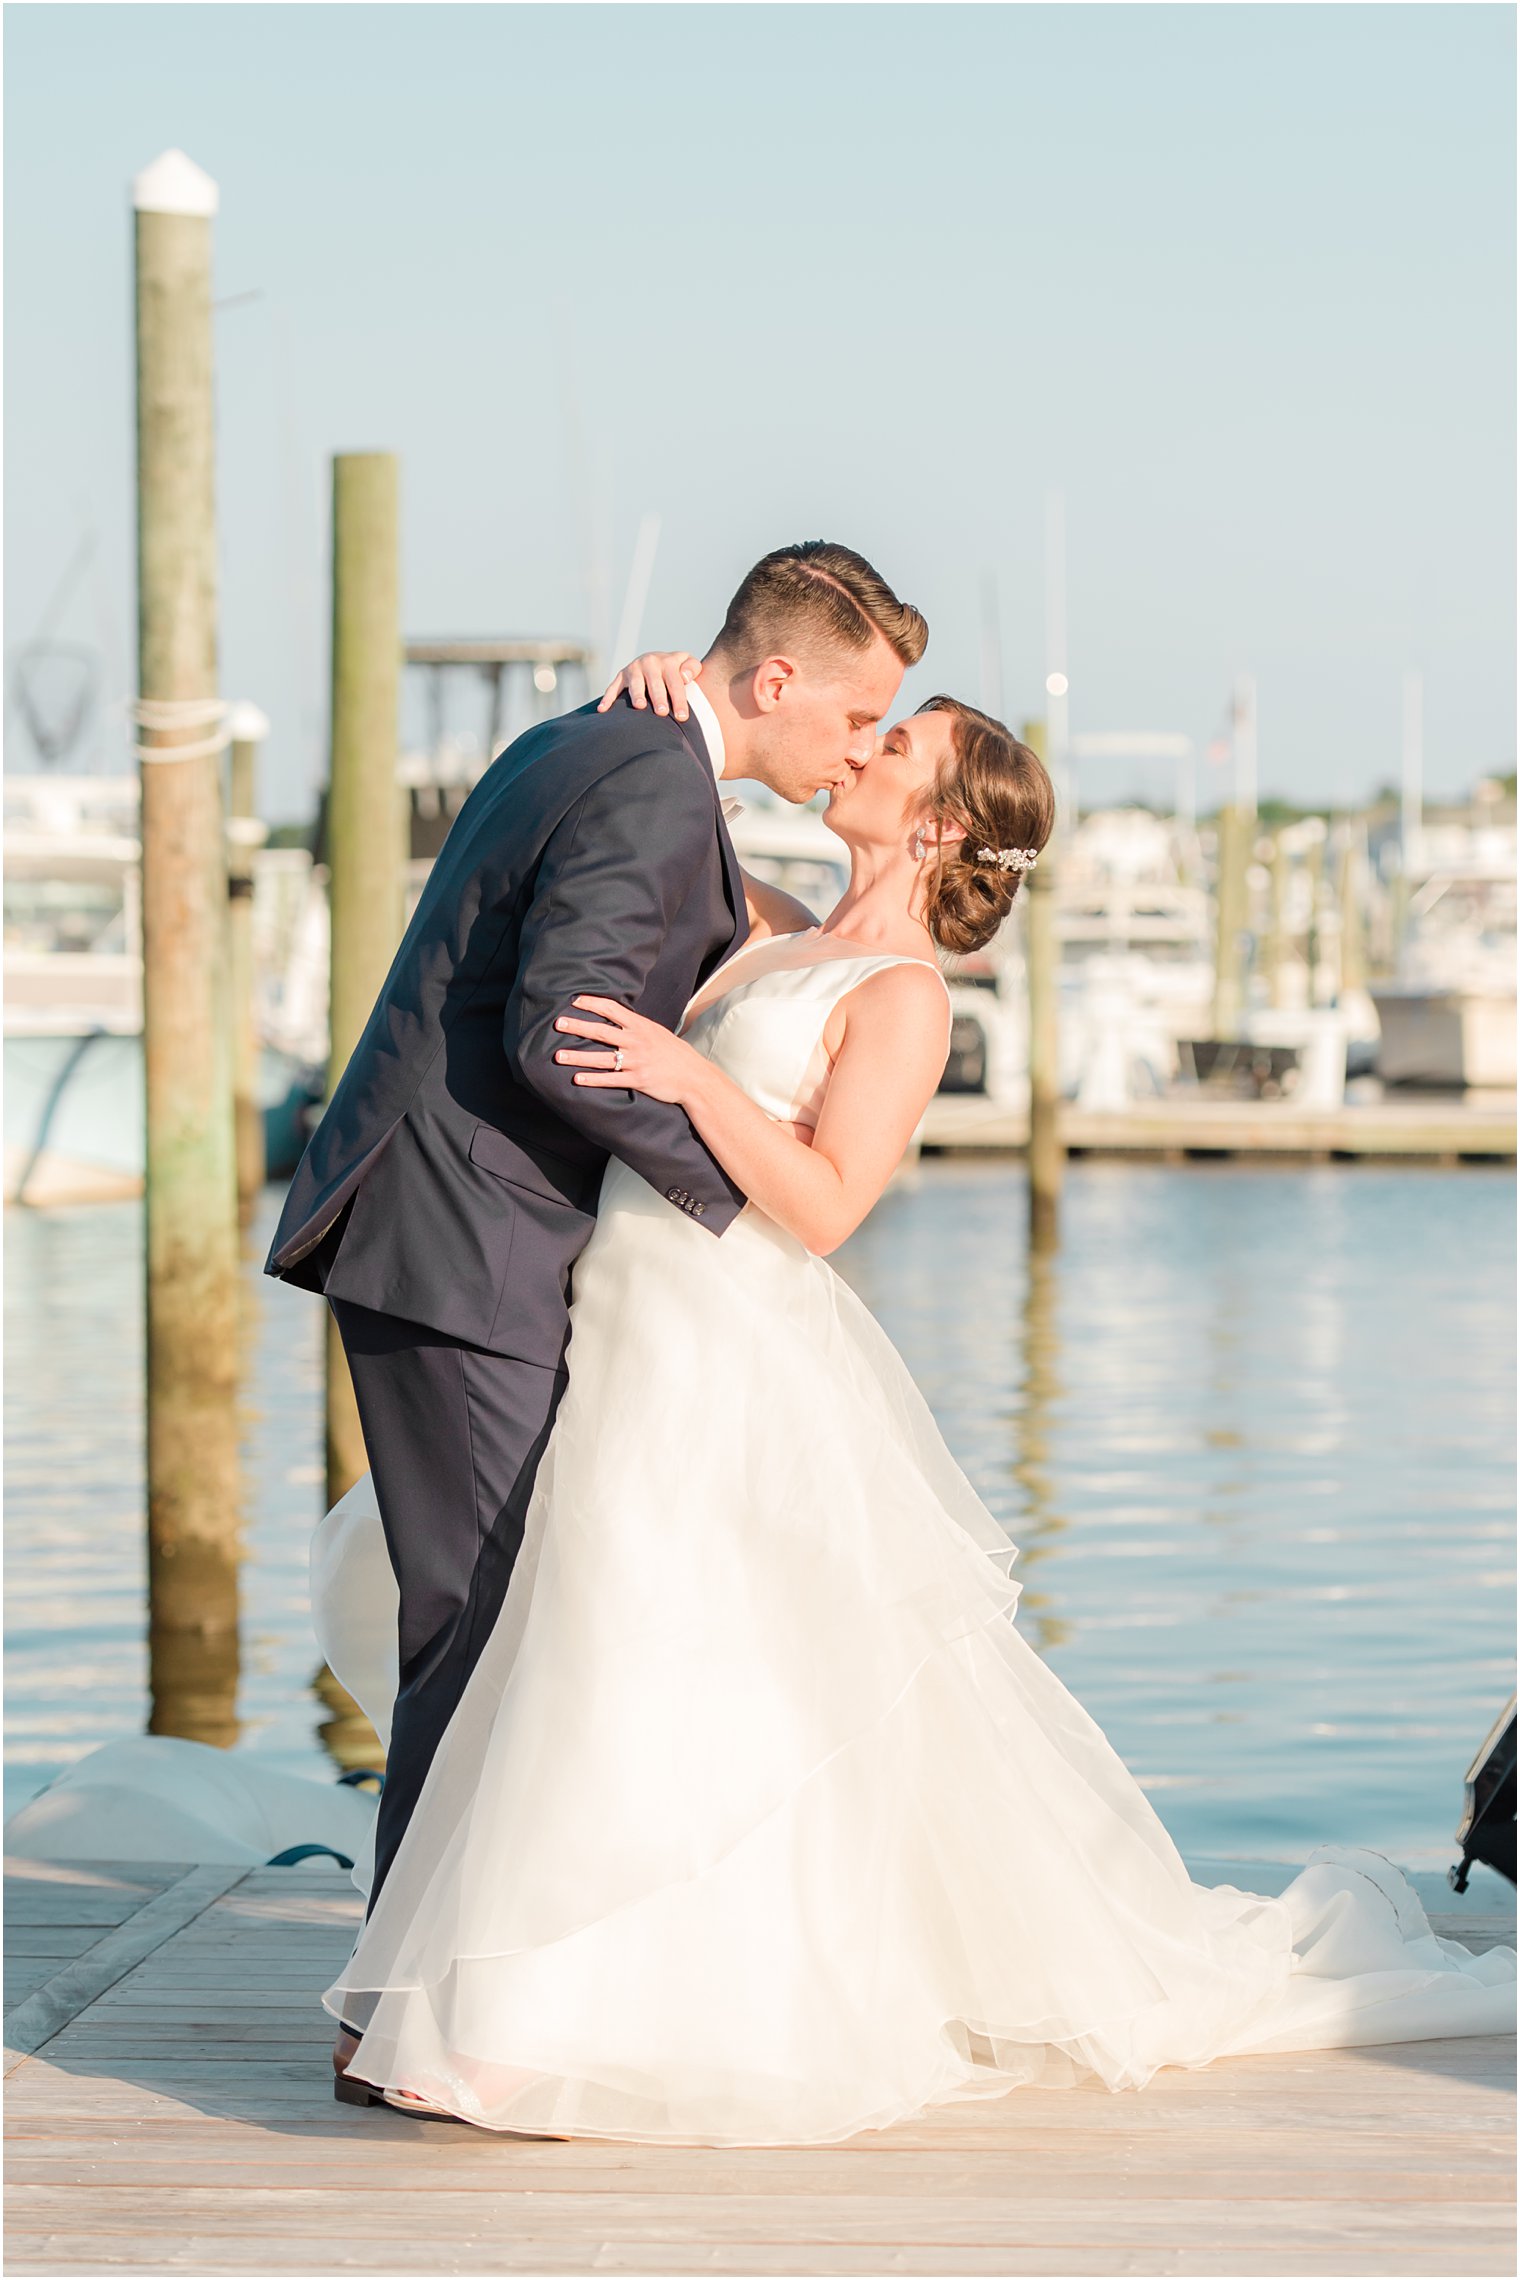 newlyweds kiss on docks during wedding photos at Crystal Point Yacht Club